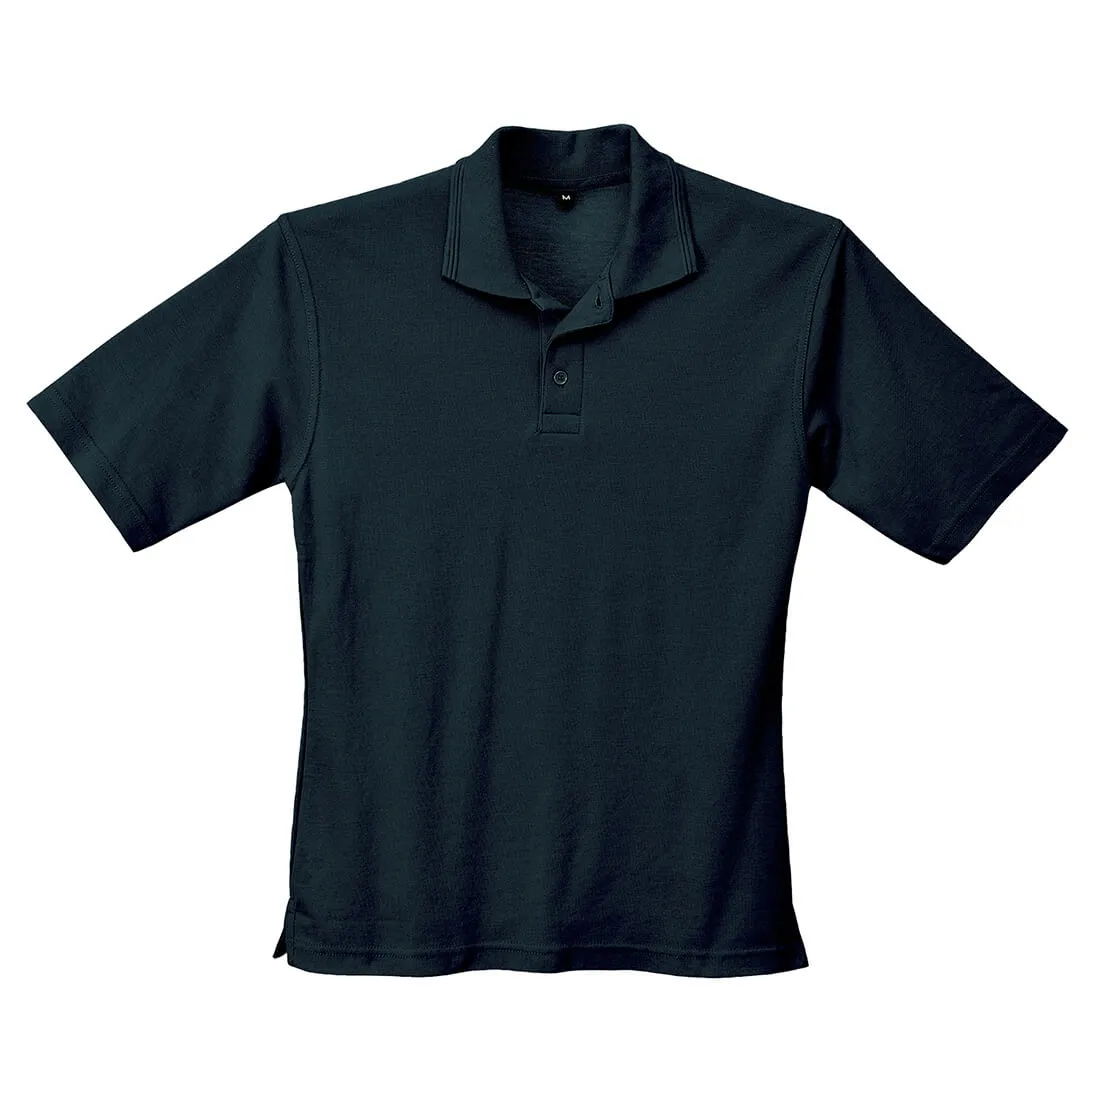 Portwest Ladies Naples Polo Shirt - Black, XS